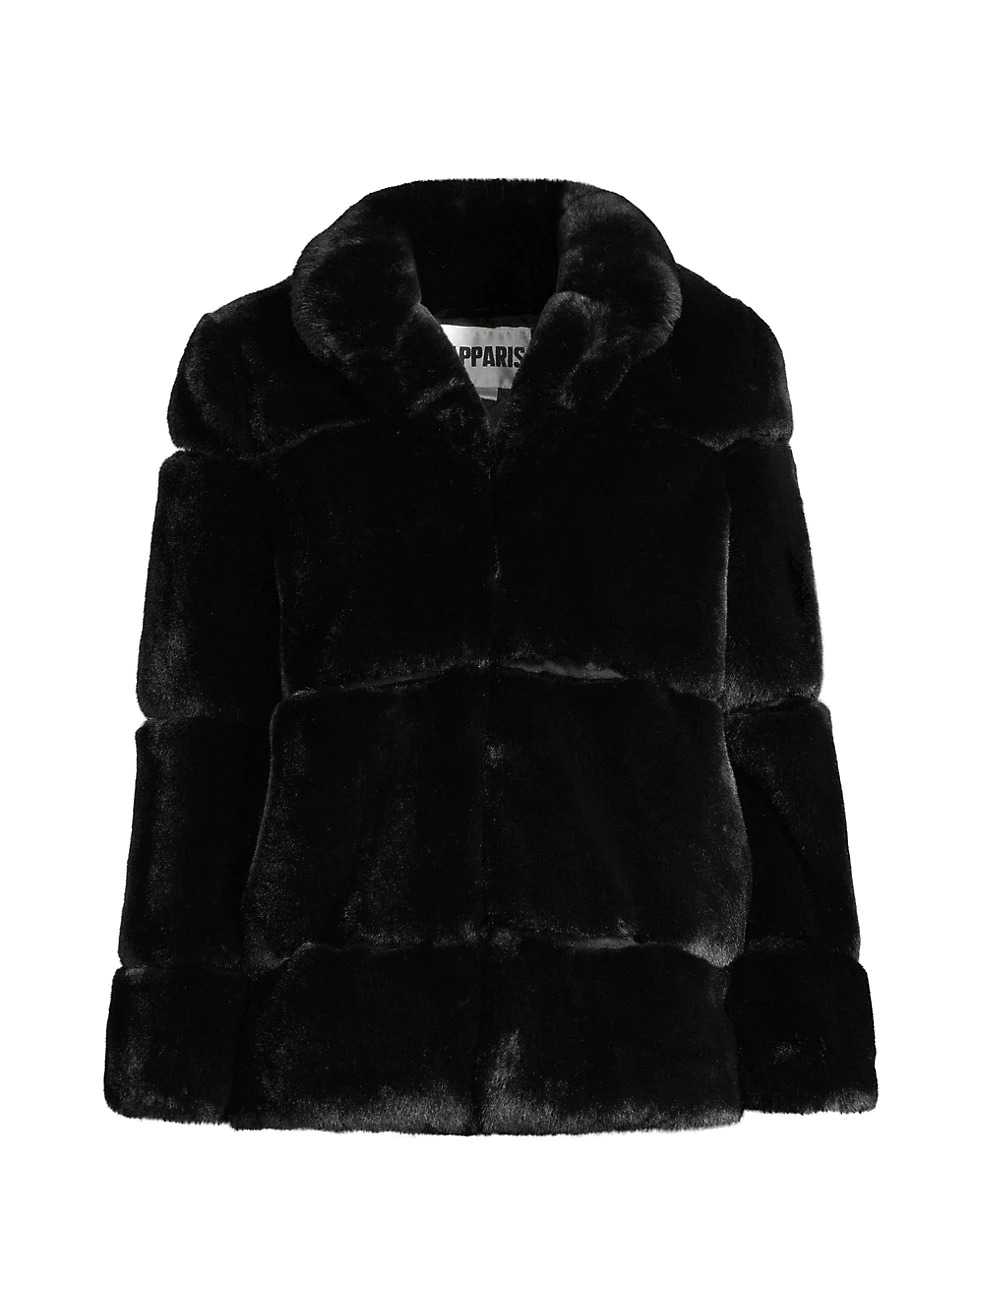 Sale on Apparis Skylar Paneled Faux Fur Jacket